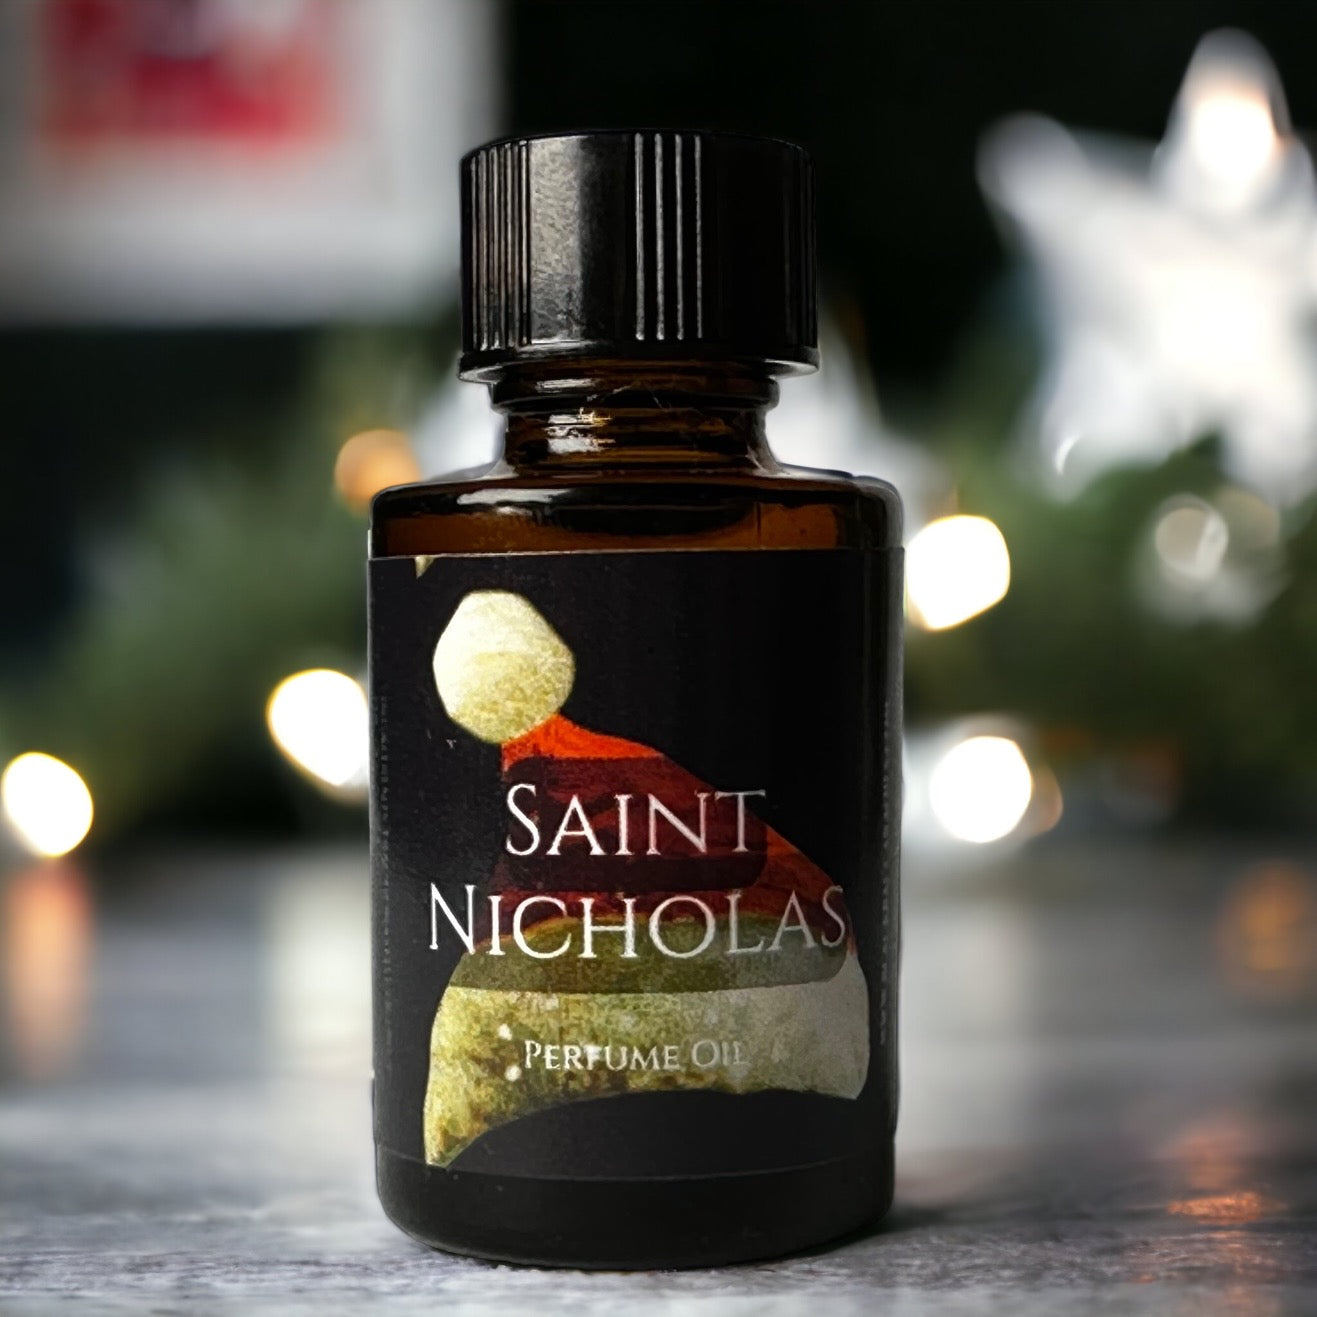 Saint Nicholas perfume